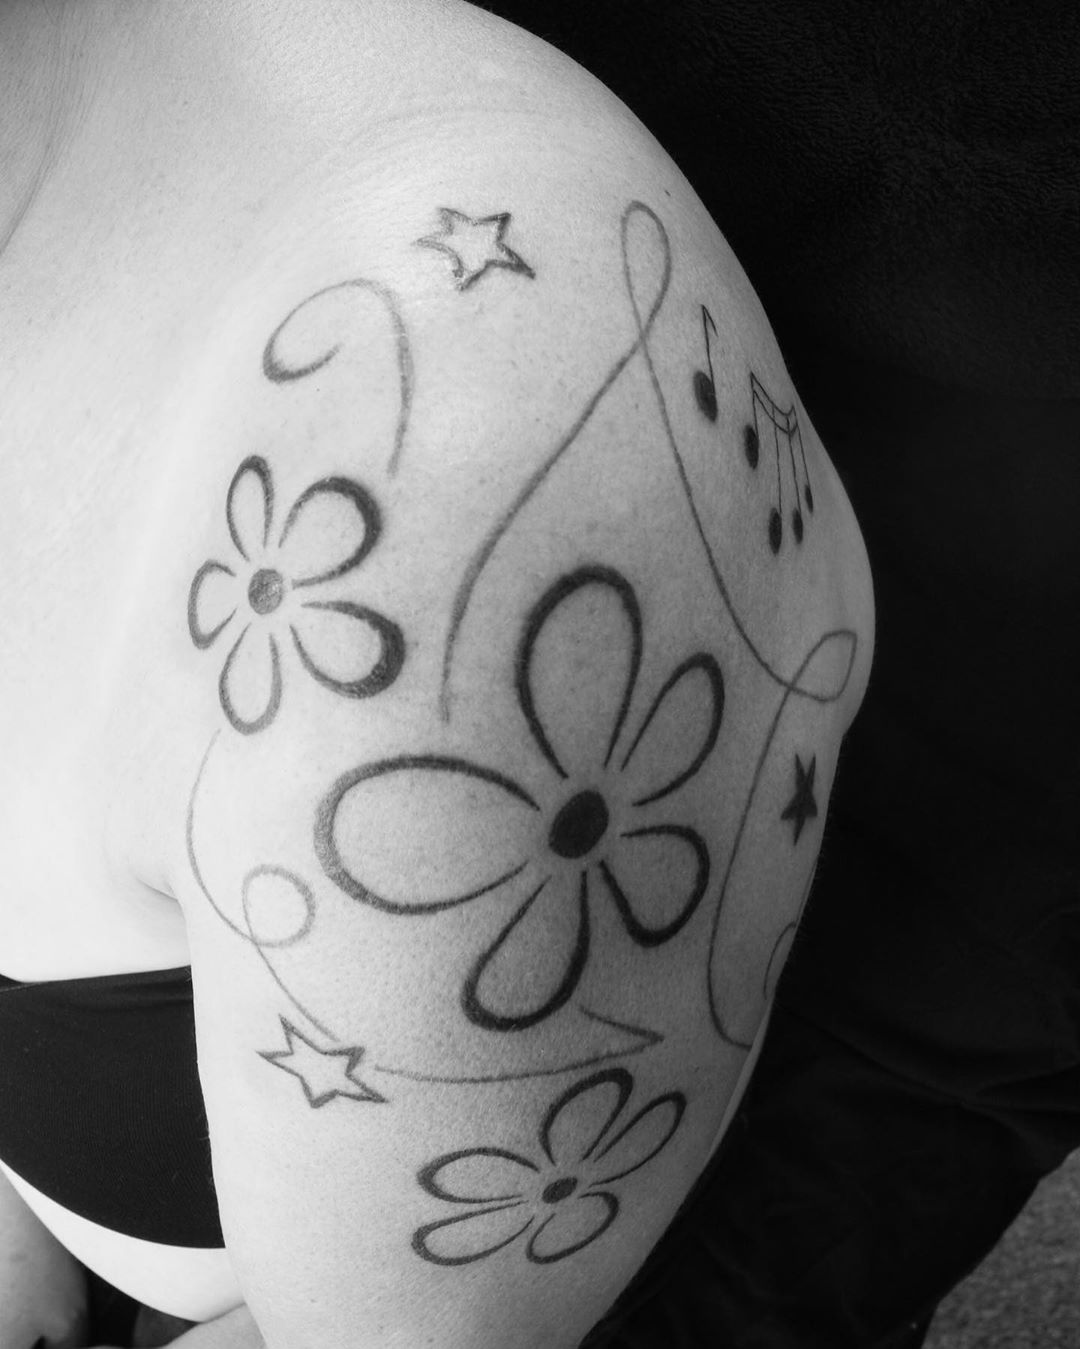 UPDATED] 65 Graceful Shoulder Tattoos for Women